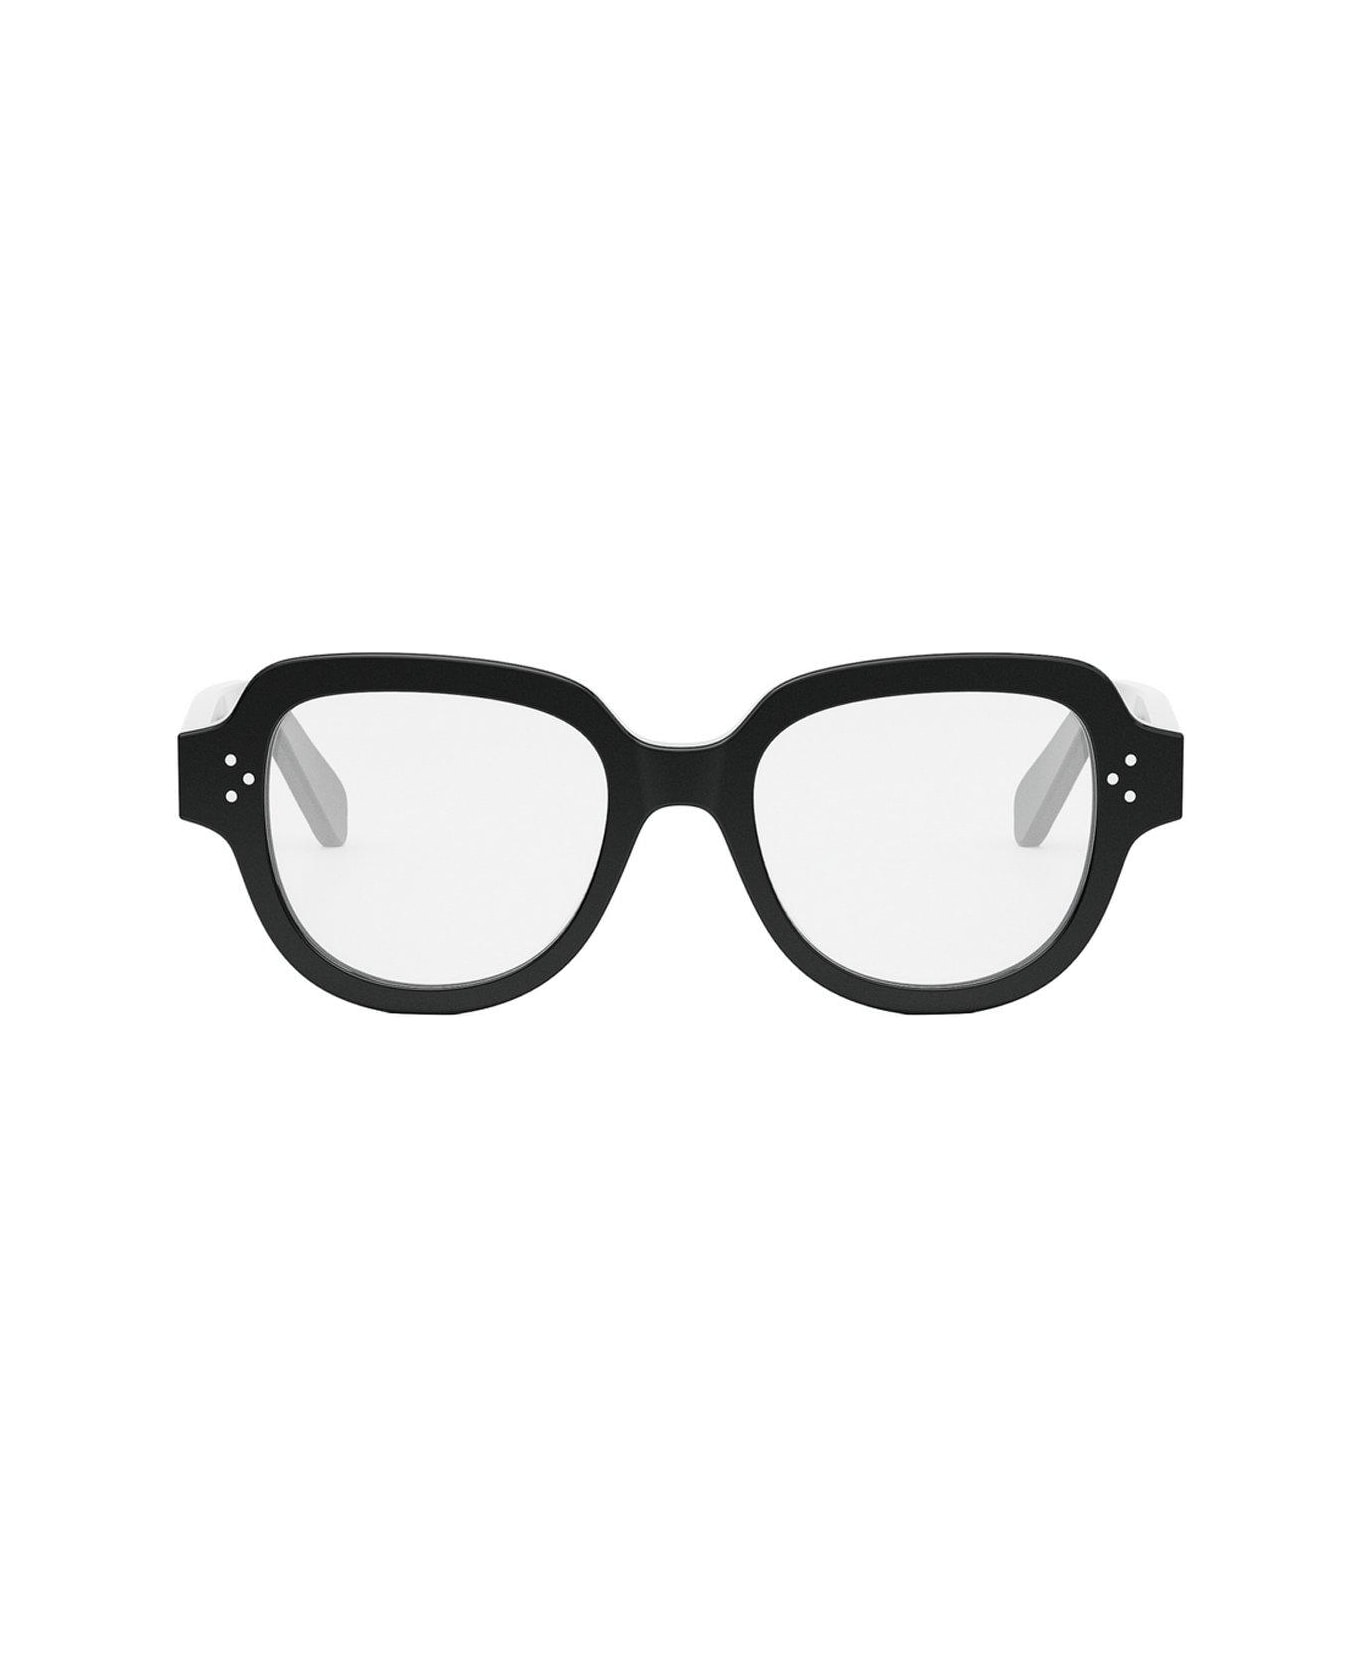 Celine Square Frame Glasses - 001